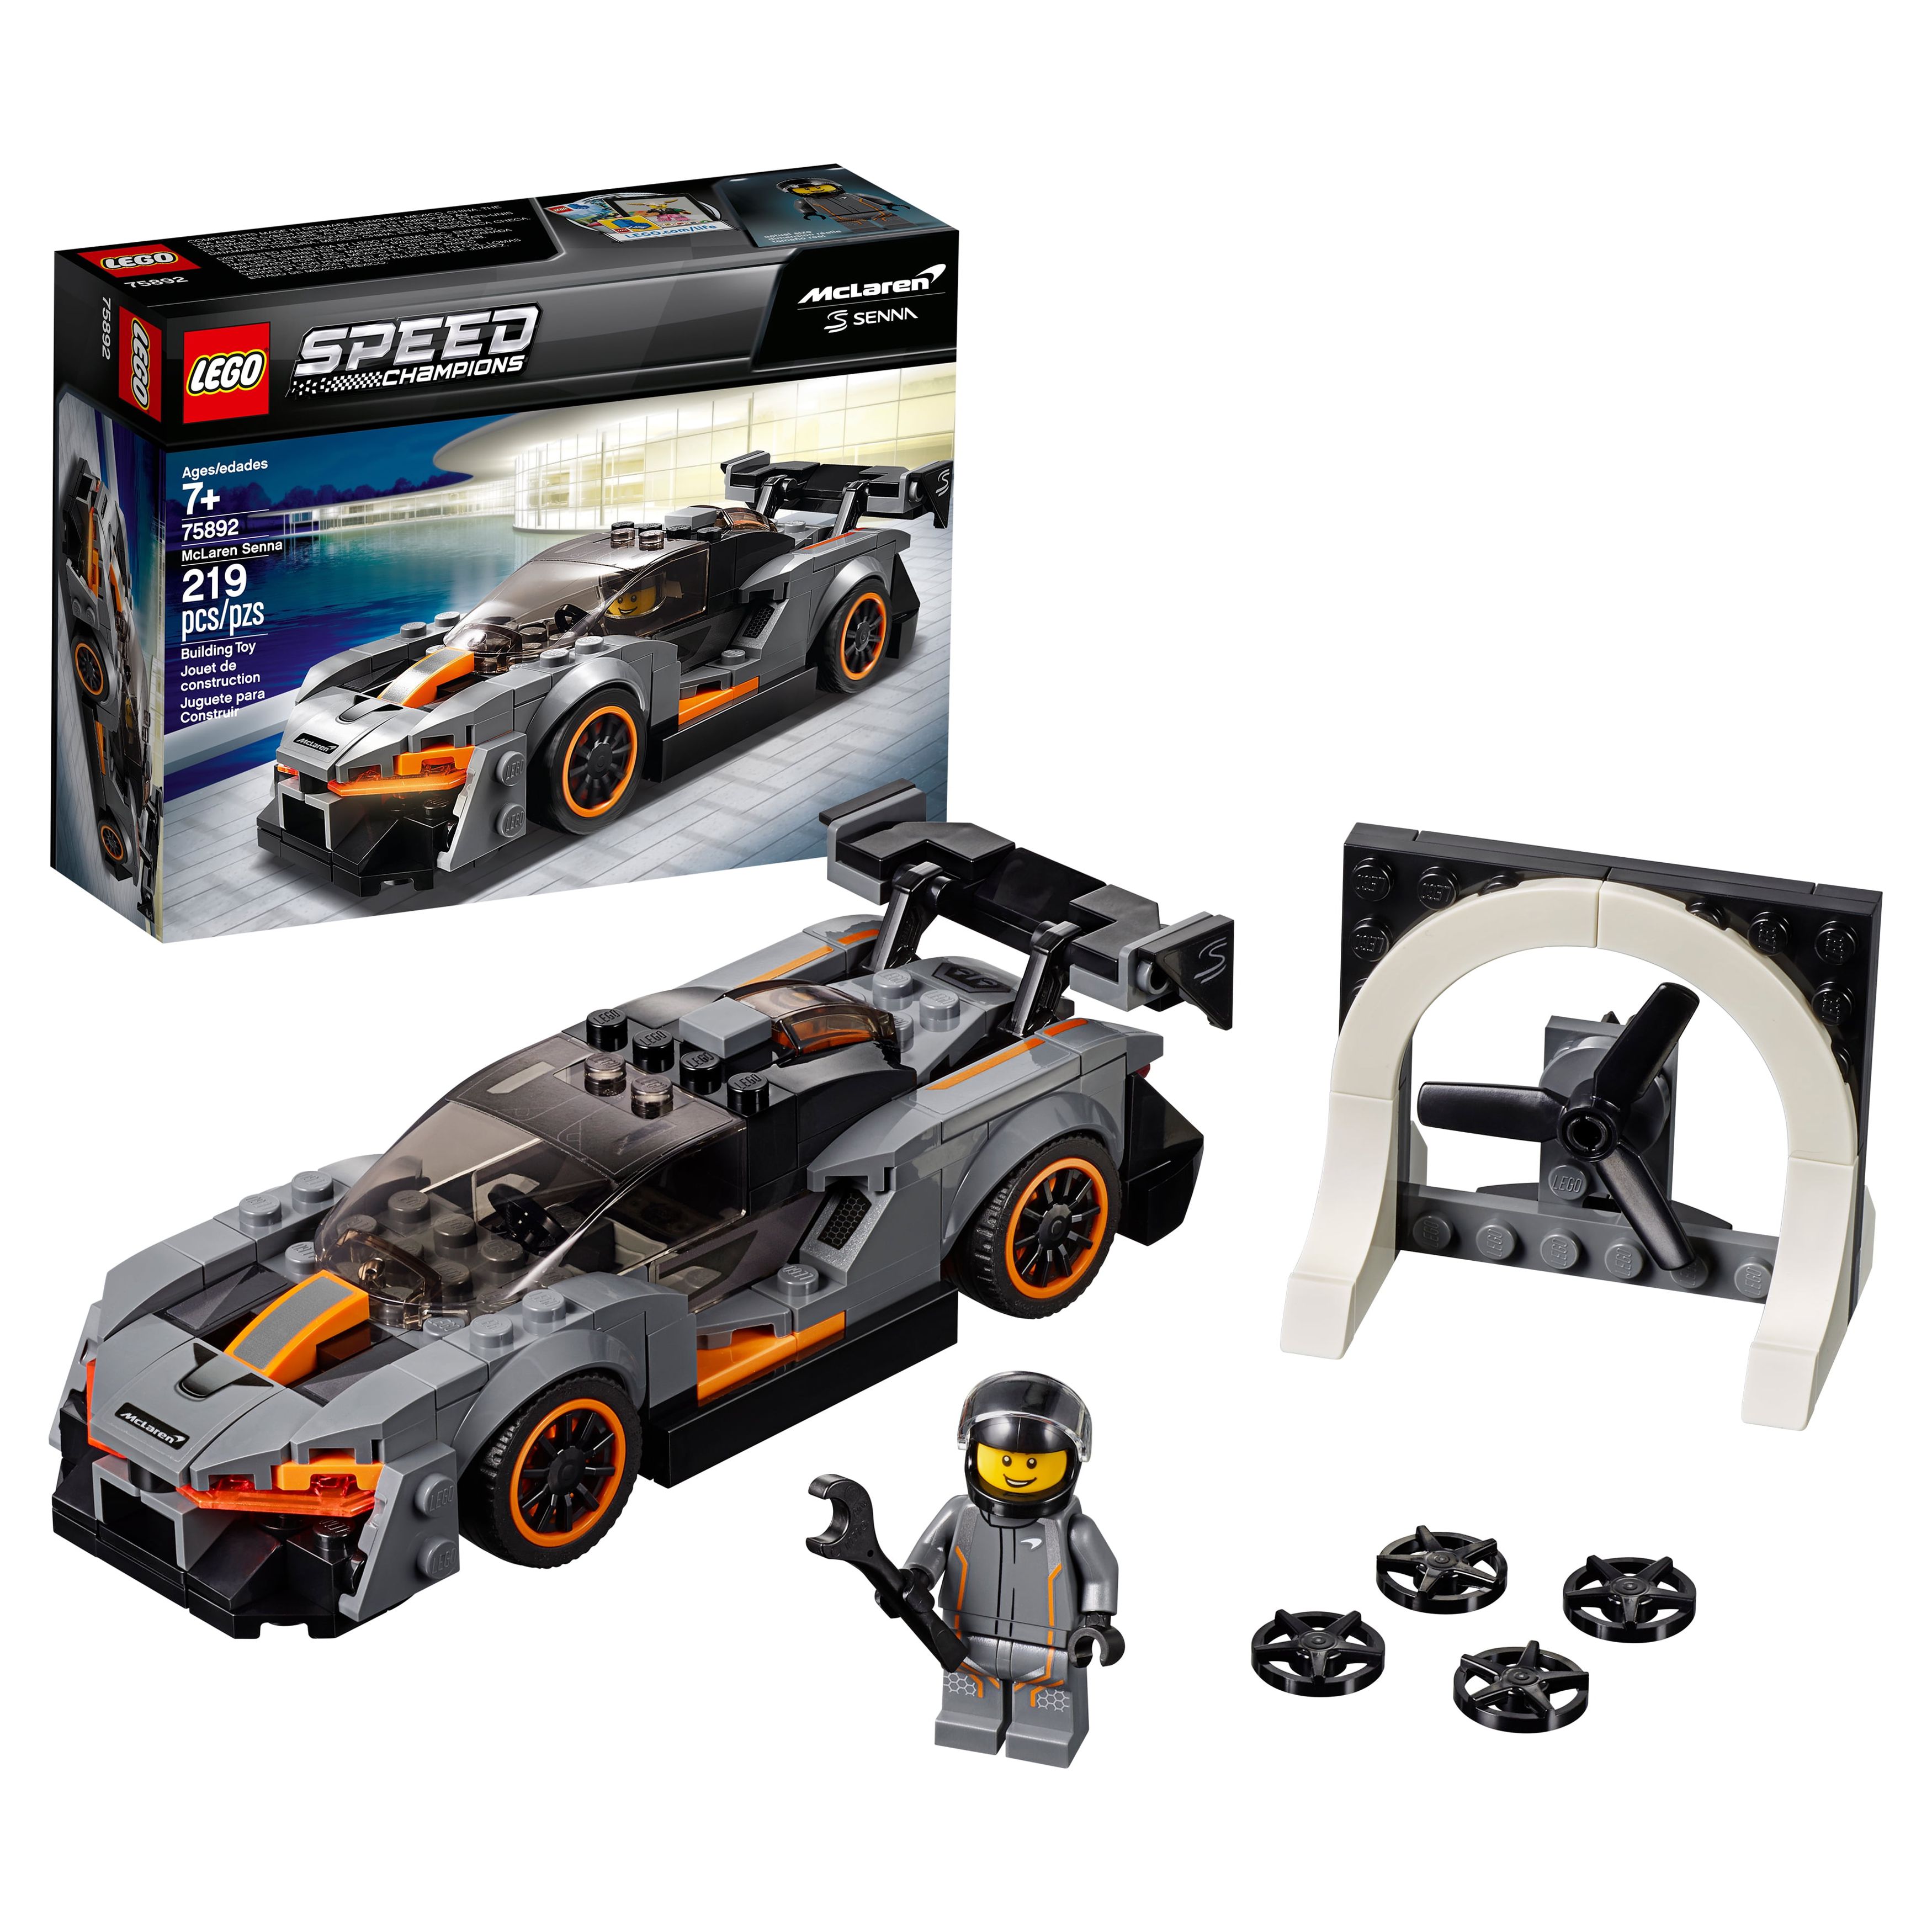 LEGO Speed Champions McLaren Senna 75892 - image 1 of 8